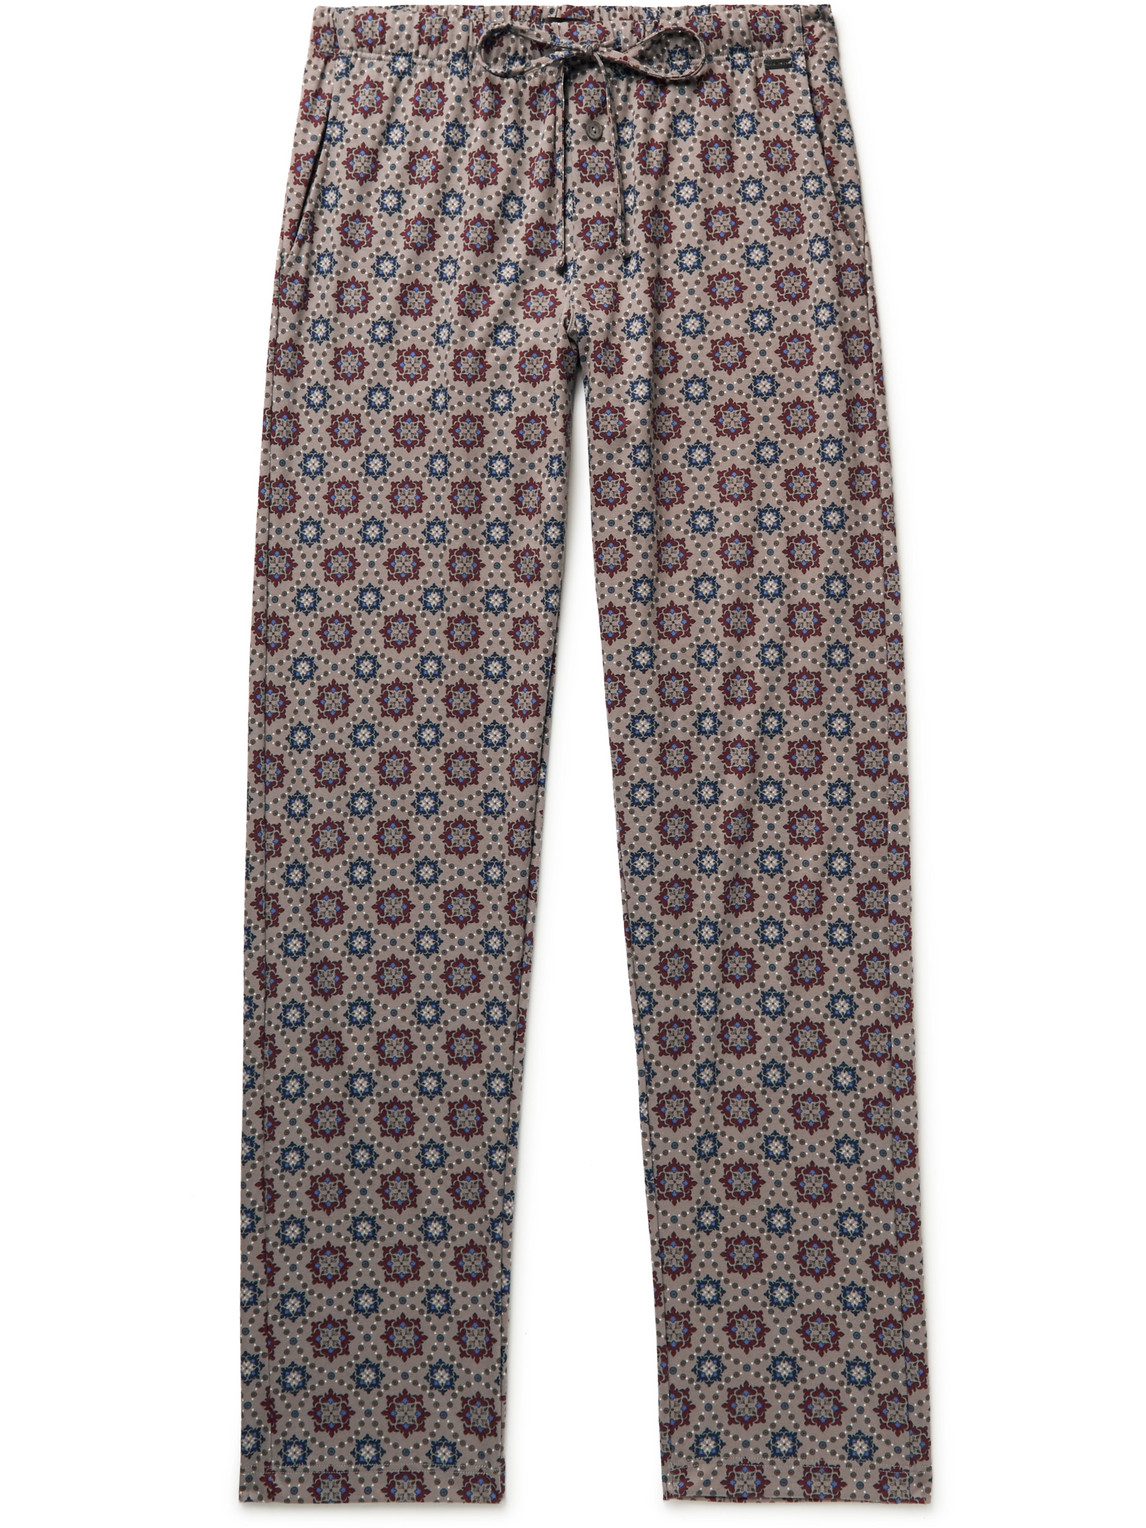 Hanro Night & Day Printed Cotton Pyjama Trousers In Classic